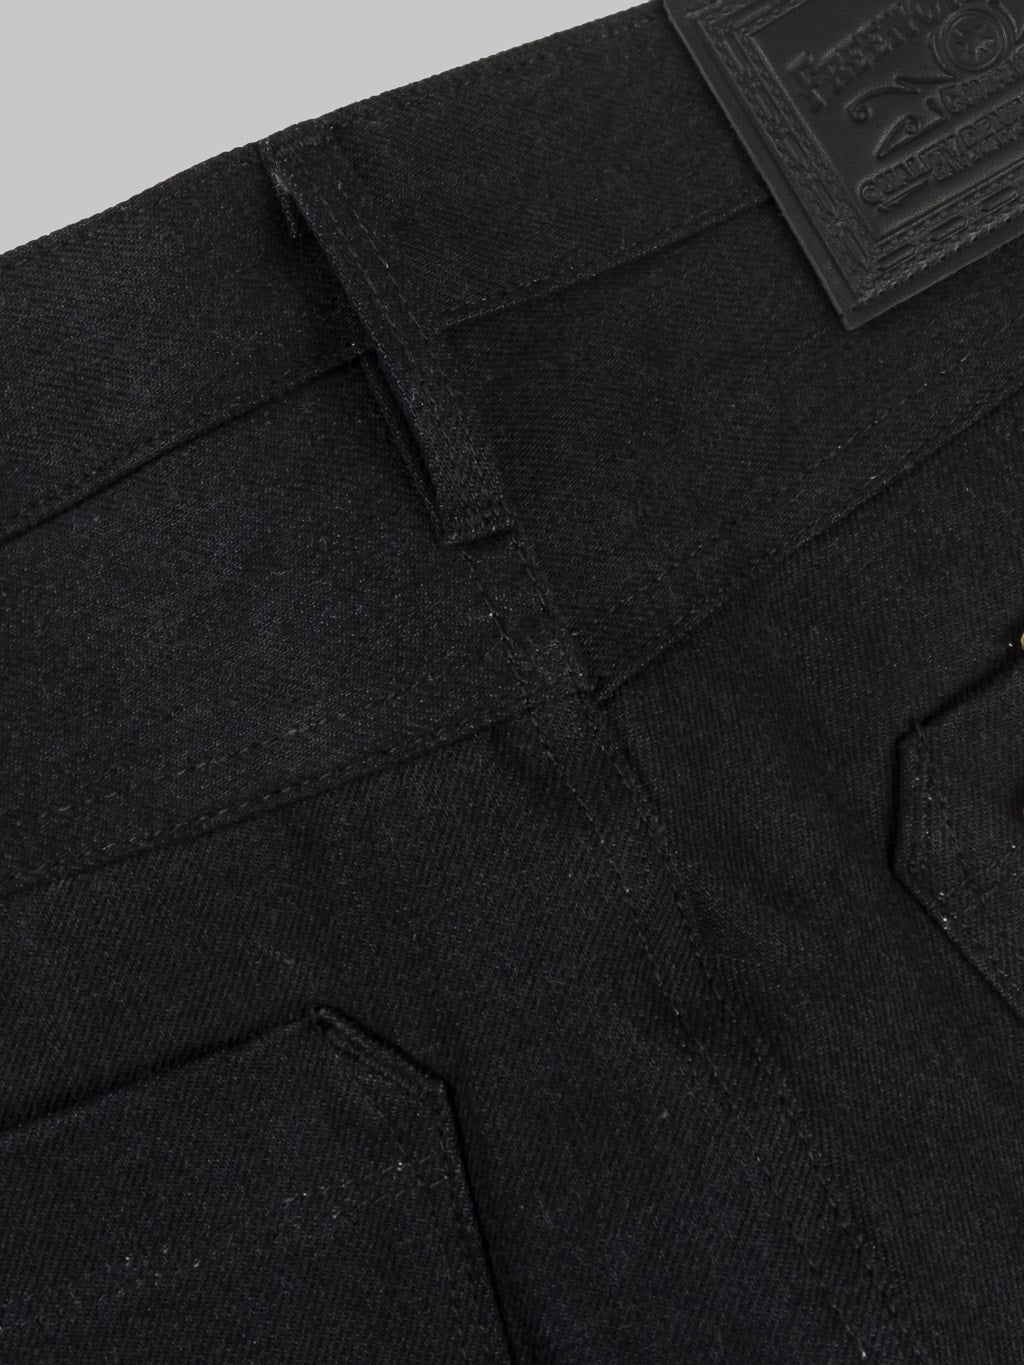 Freenote Cloth Rios Black Grey Japanese Denim Slim Straight Jeans belt loop